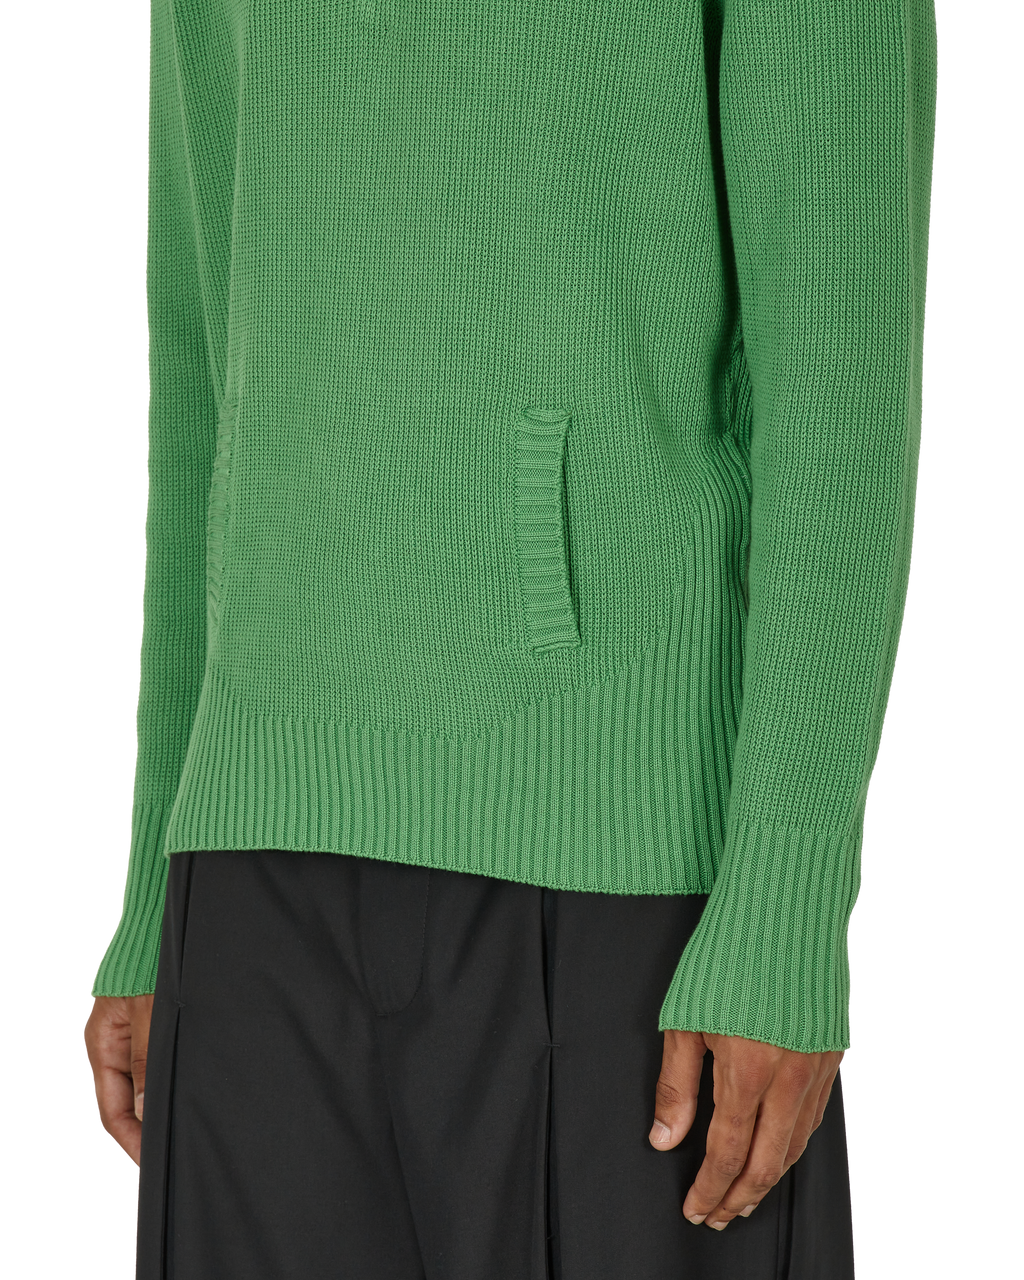 _J.L - A.L_ Lancet Zipped Sweater J277370-S-Green